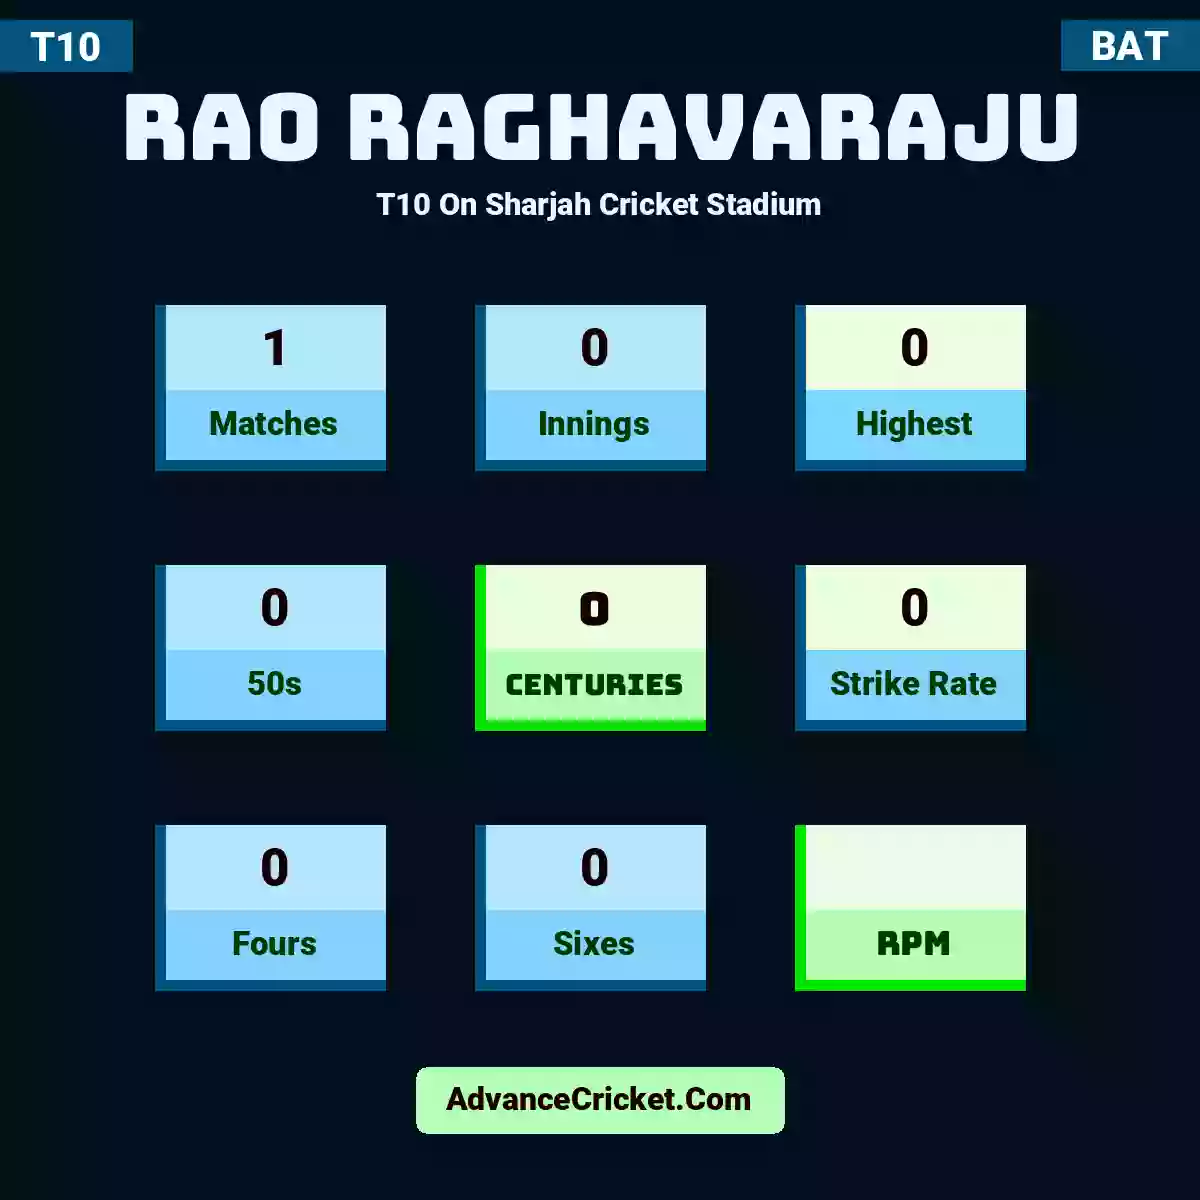 Rao Raghavaraju T10  On Sharjah Cricket Stadium, Rao Raghavaraju played 1 matches, scored 0 runs as highest, 0 half-centuries, and 0 centuries, with a strike rate of 0. R.Raghavaraju hit 0 fours and 0 sixes.